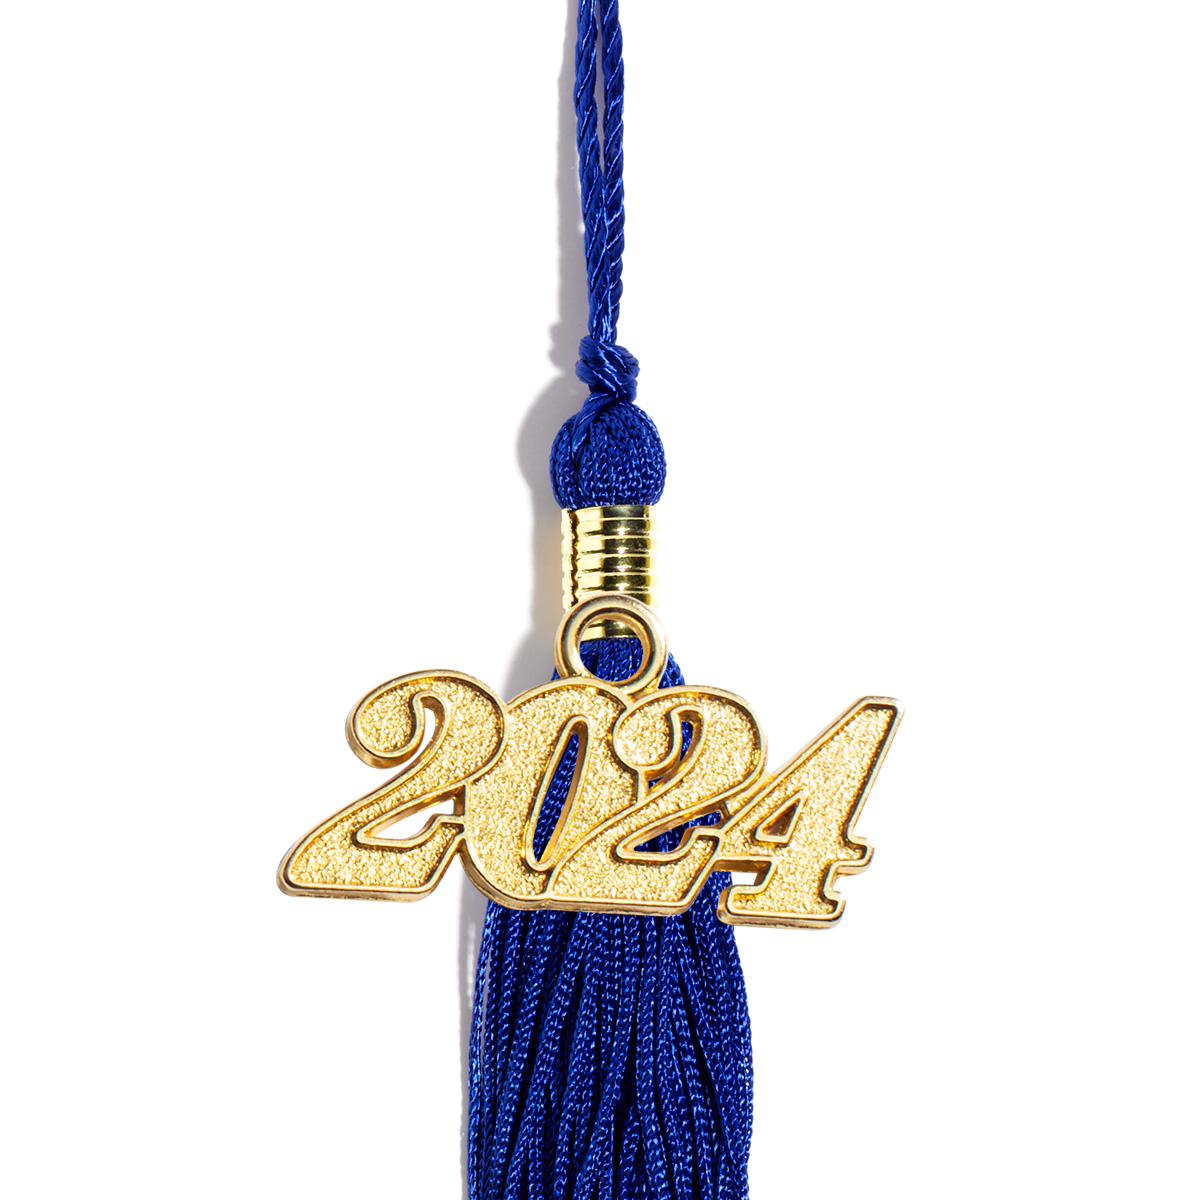 Graduation Tassel Graduation Cap Tassel with 2021 Year Charm Ceremonies Accessories for Graduates 2 Pcs（Golden） Eaaglo Tassel 